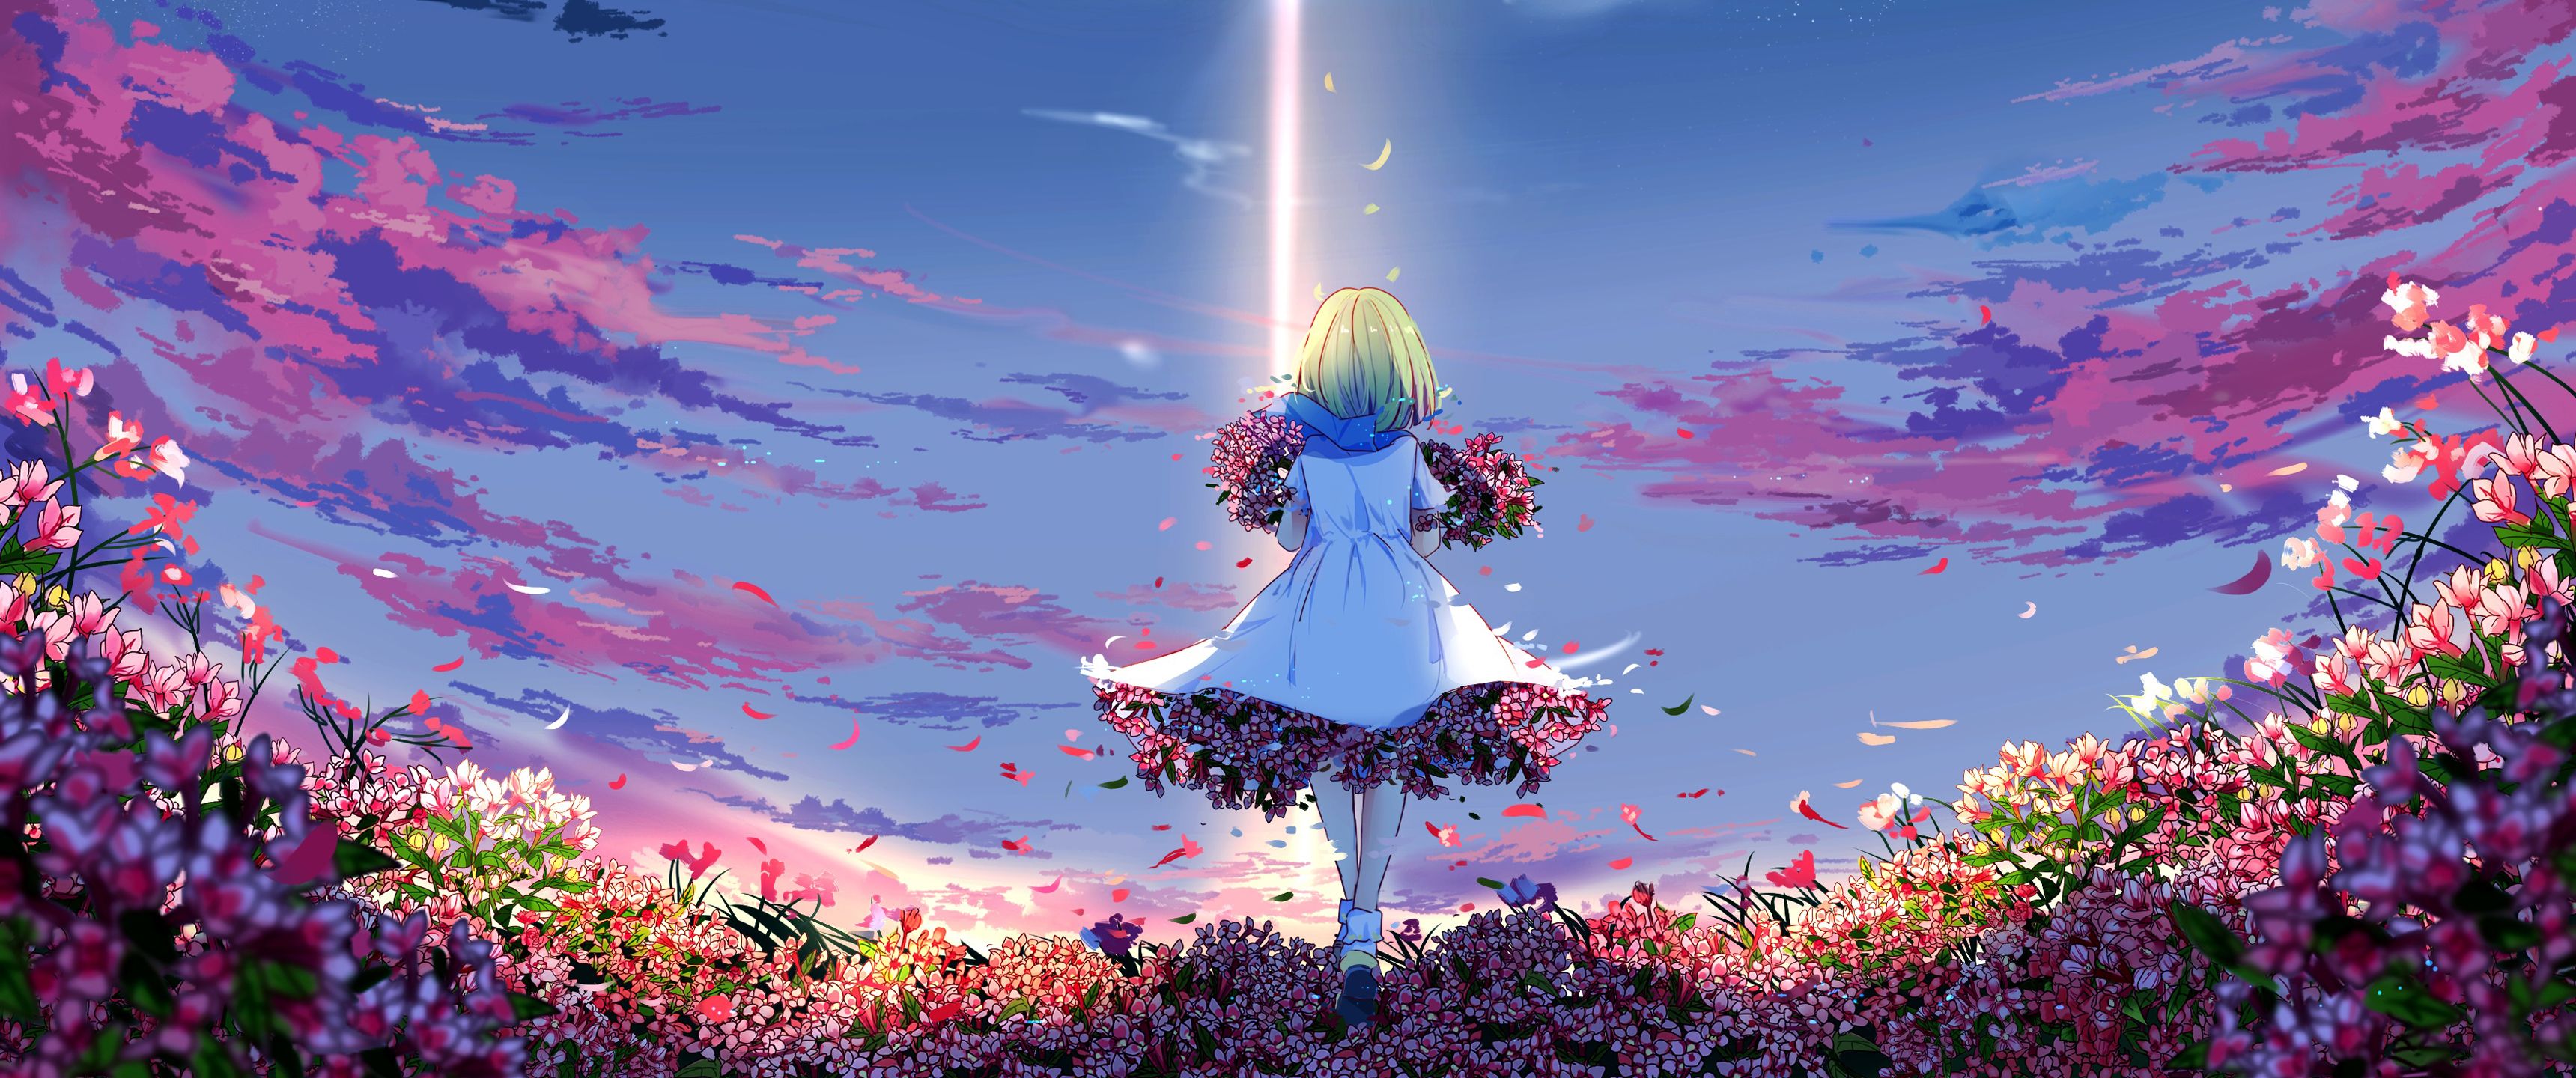 15188 Anime Flower Images Stock Photos  Vectors  Shutterstock